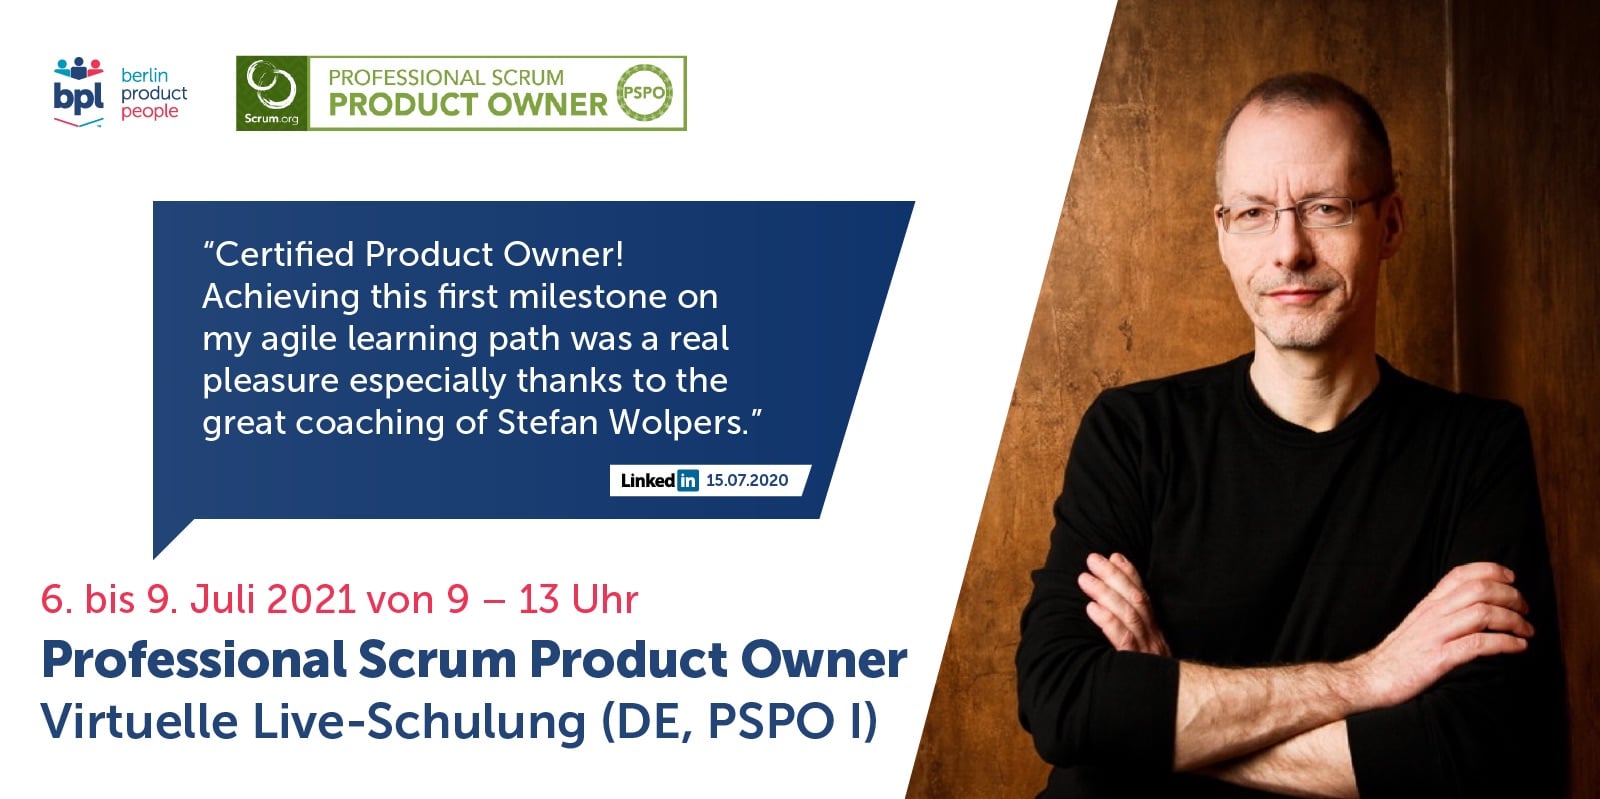 Virtuelles Professional Scrum Product Owner Training mit PSPO Zertifikat — 6. bis 9. Juli 2021 — Berlin Product People GmbH